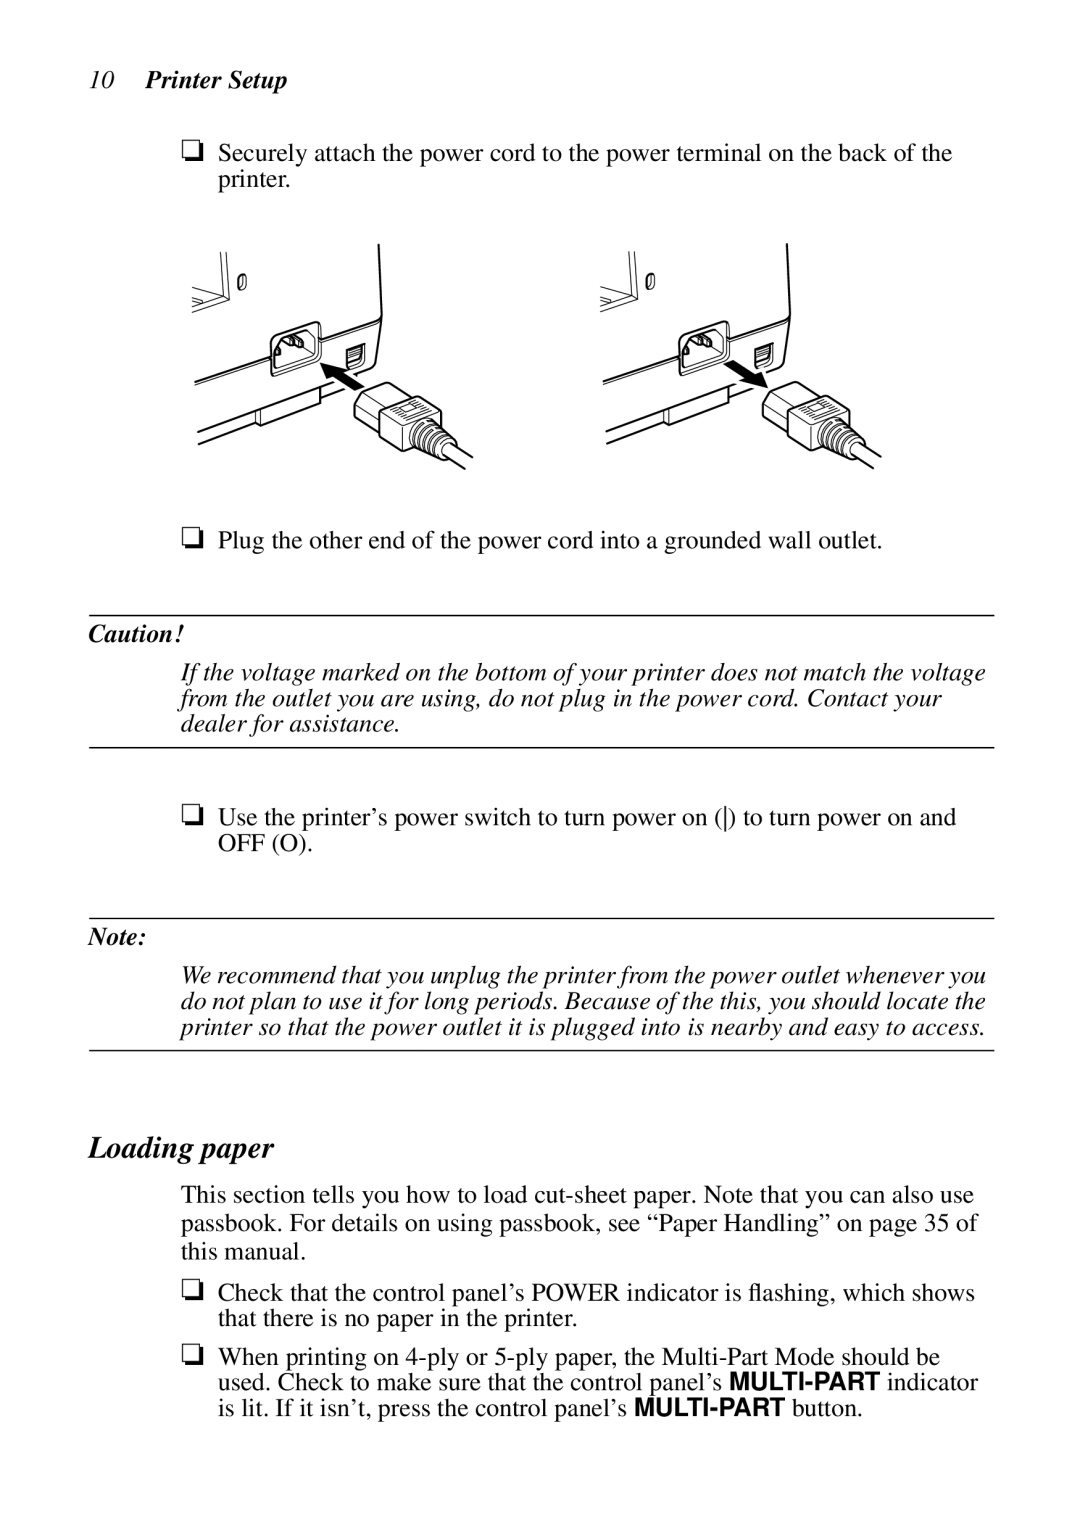 Star Micronics LC-8021 manual Loading paper, Printer Setup 